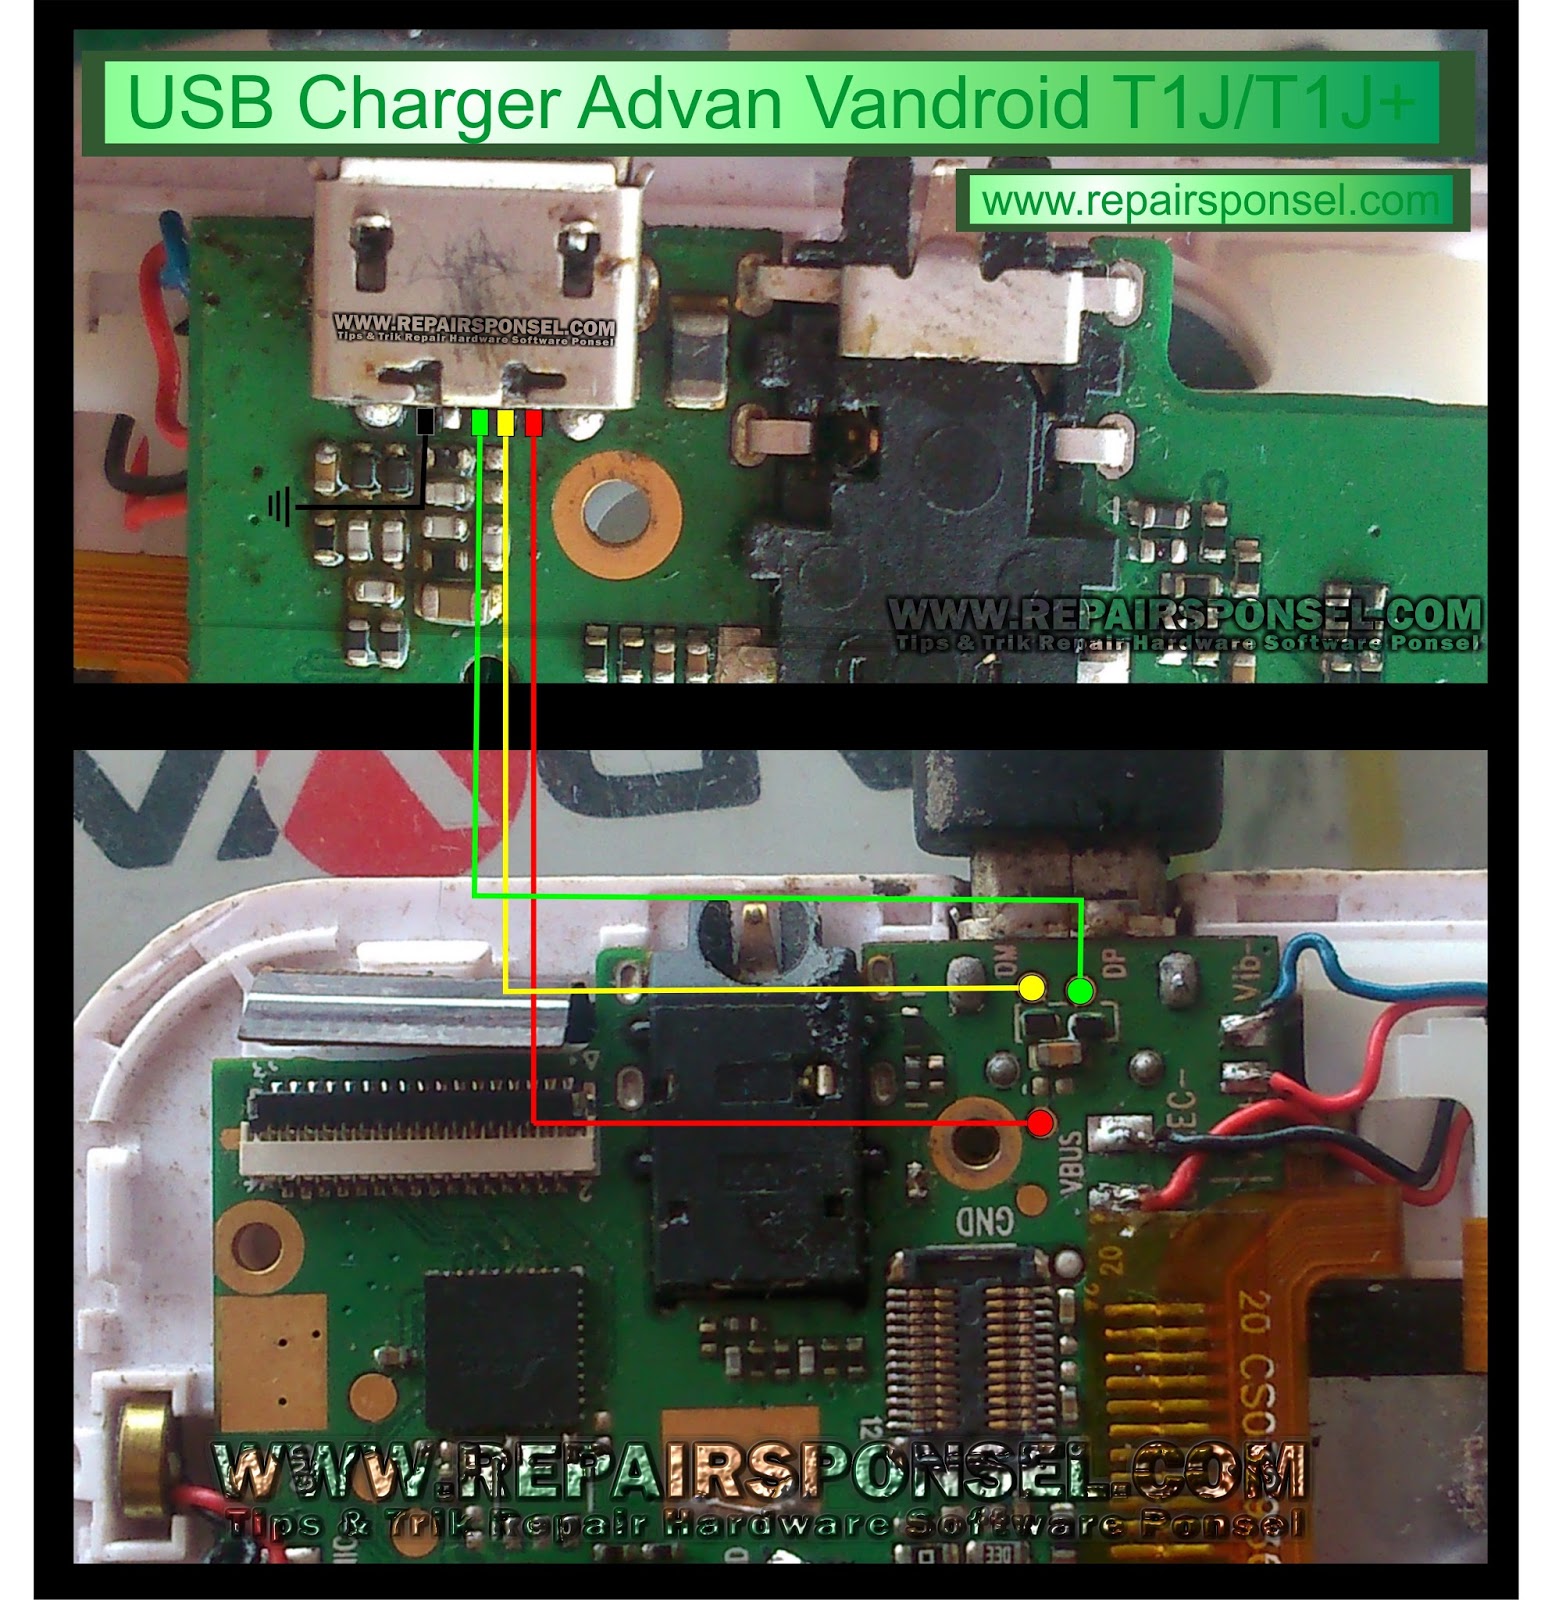 Trik Jumper USB Charger Advan Vandroid T1J+ - Repairs Ponsel